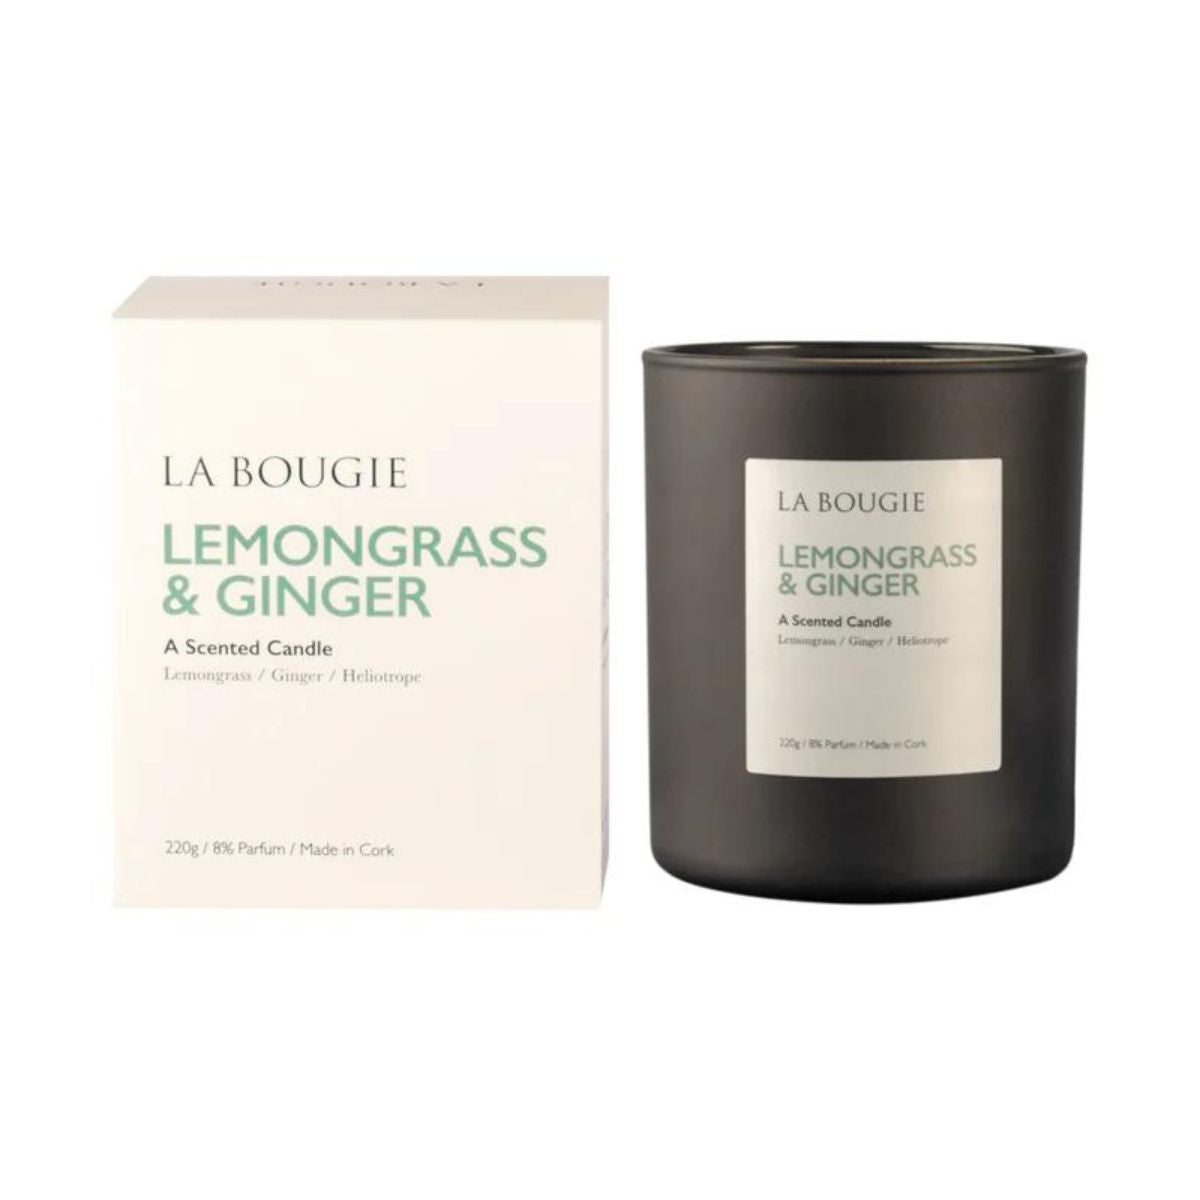 La Bougie Lemongrass & Ginger Candle